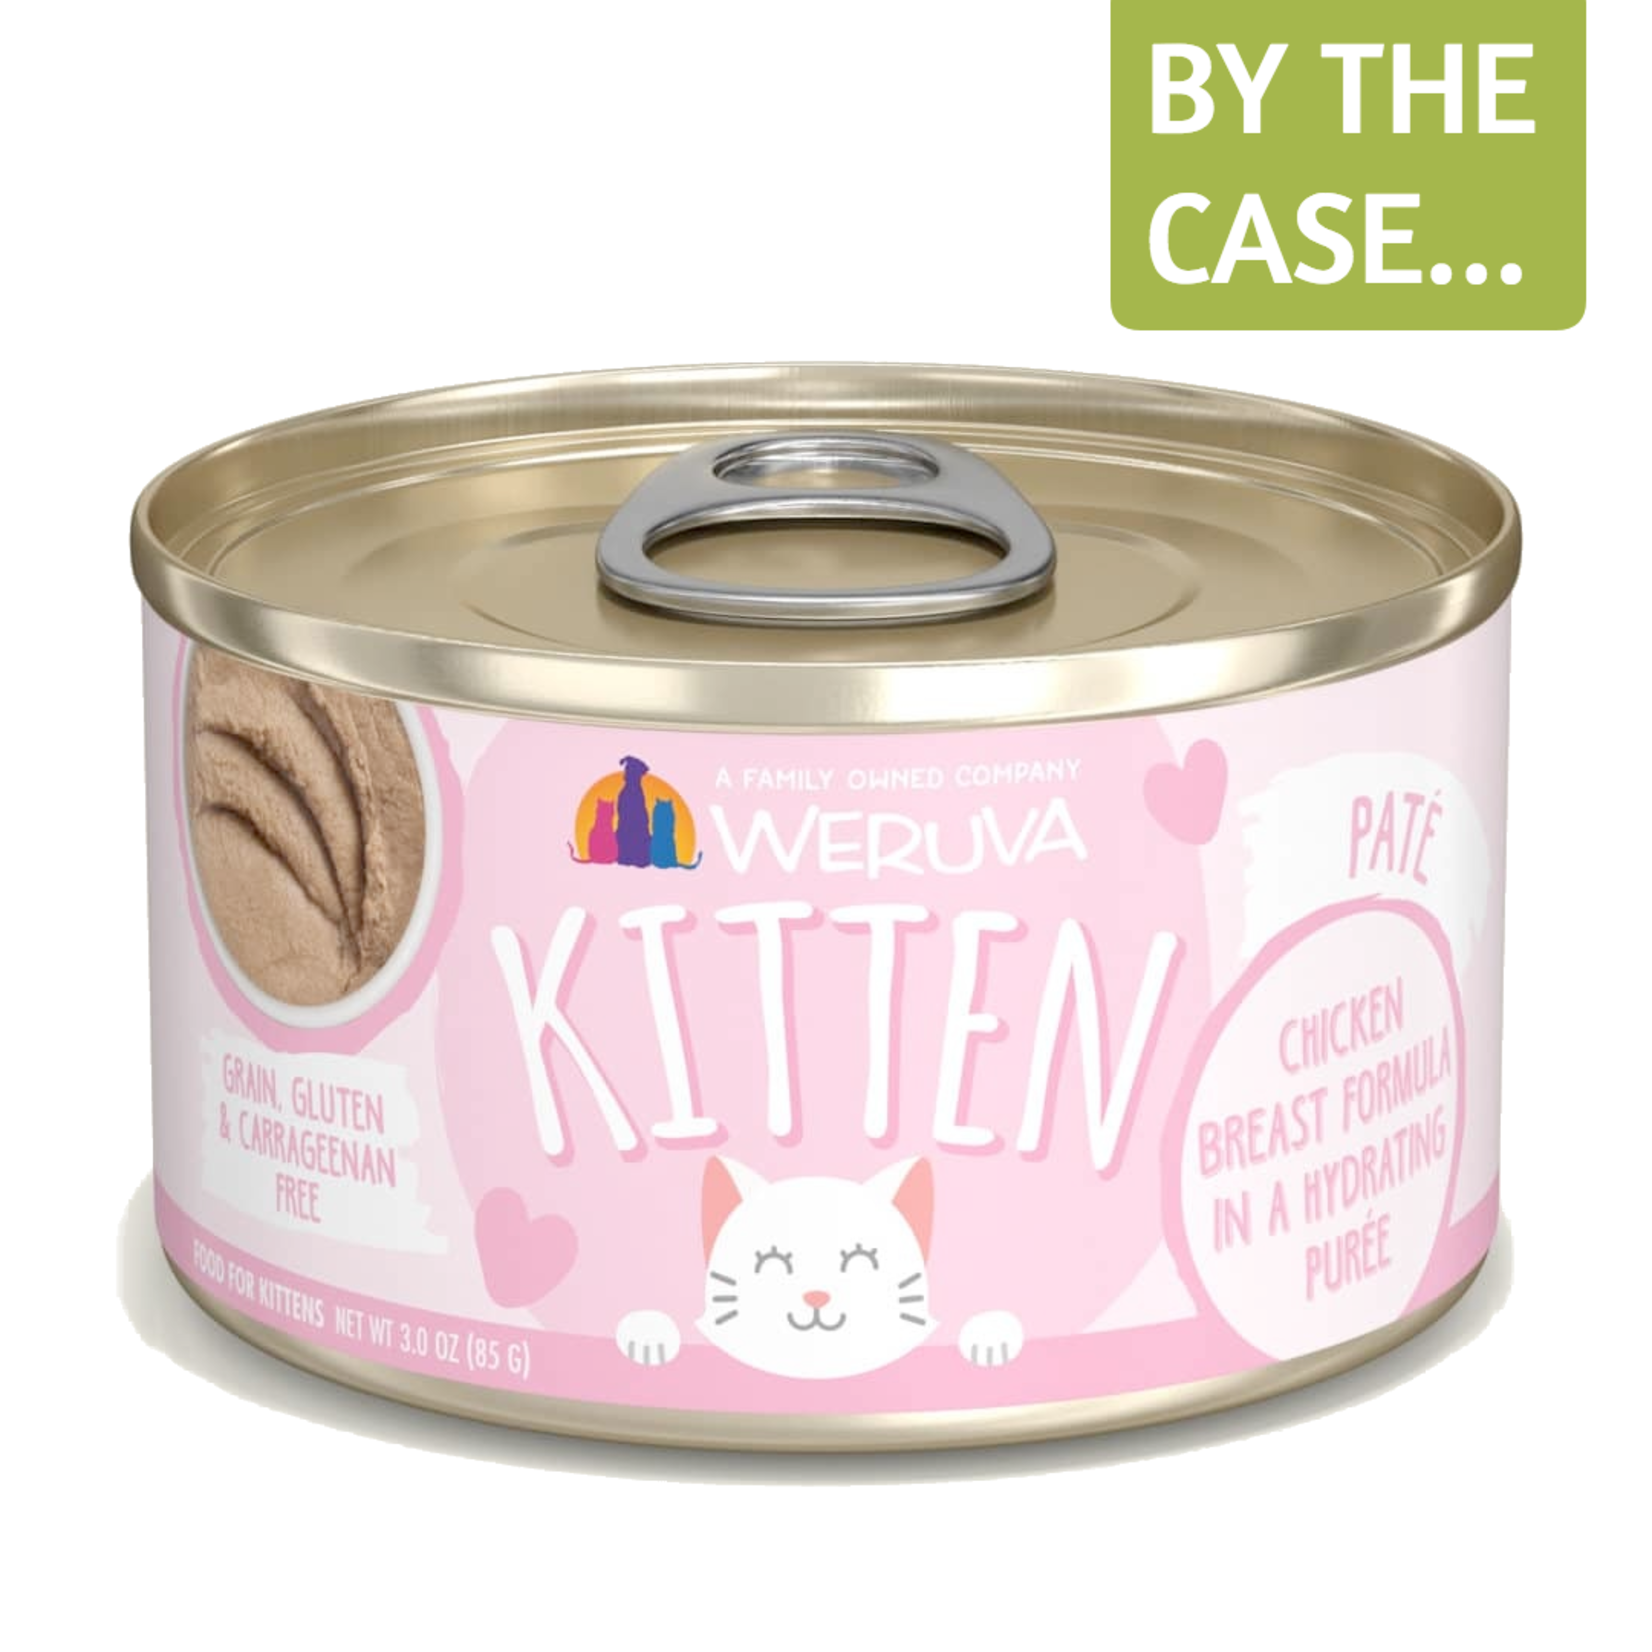 Weruva Weruva Kitten Wet Cat Food Chicken Breast Formula in a Hydrating Puree3.0oz Can Grain Free